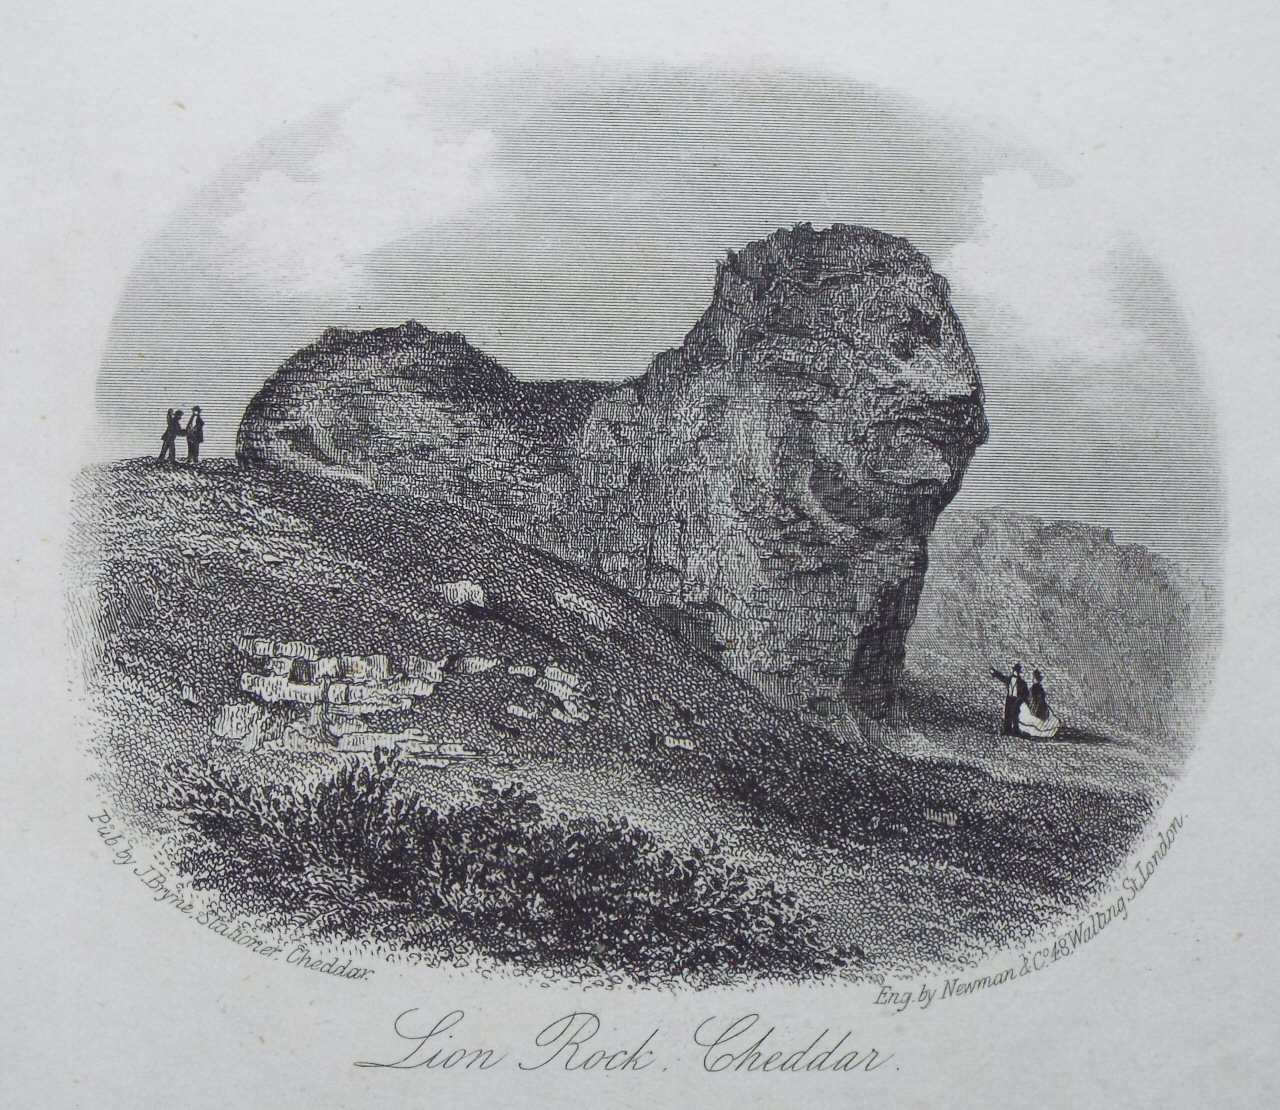 Steel Vignette - Lion Rock, Cheddar - Newman